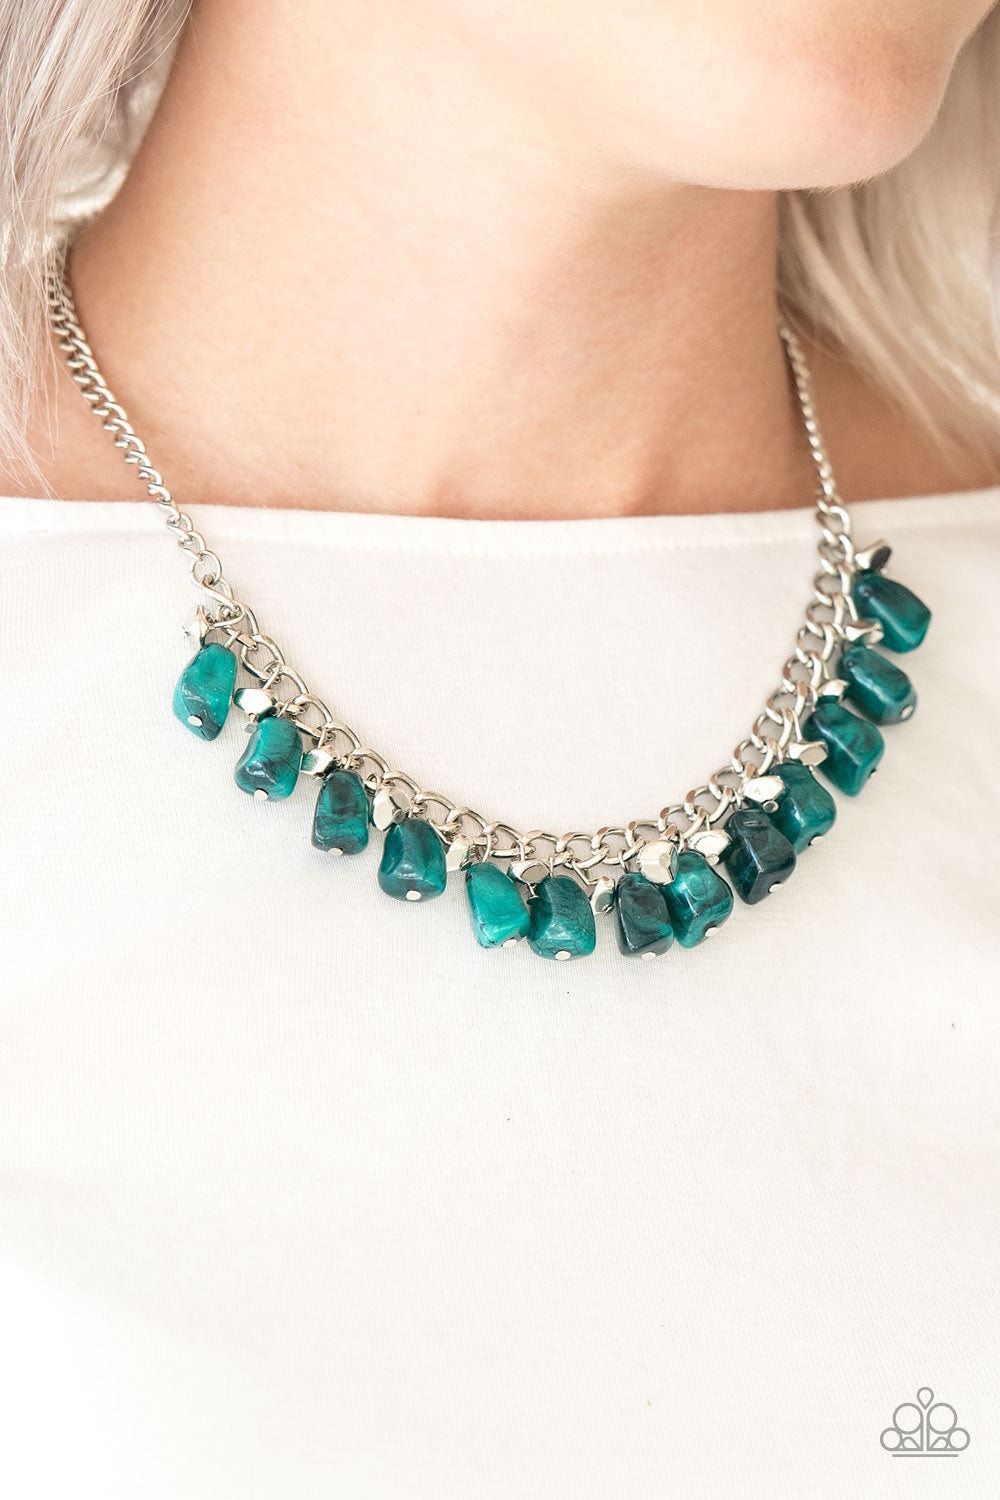 Rocky Shores - Green necklace set